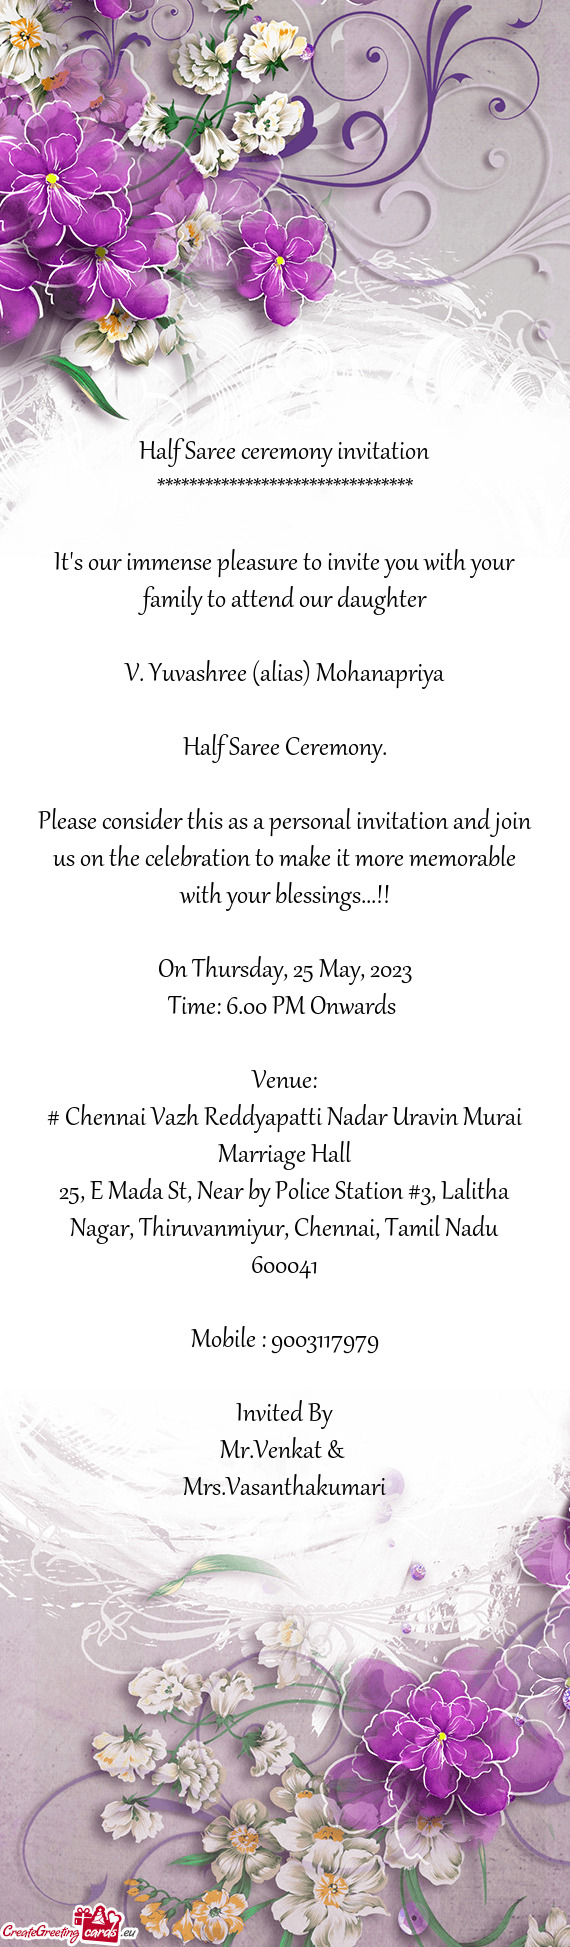 # Chennai Vazh Reddyapatti Nadar Uravin Murai Marriage Hall